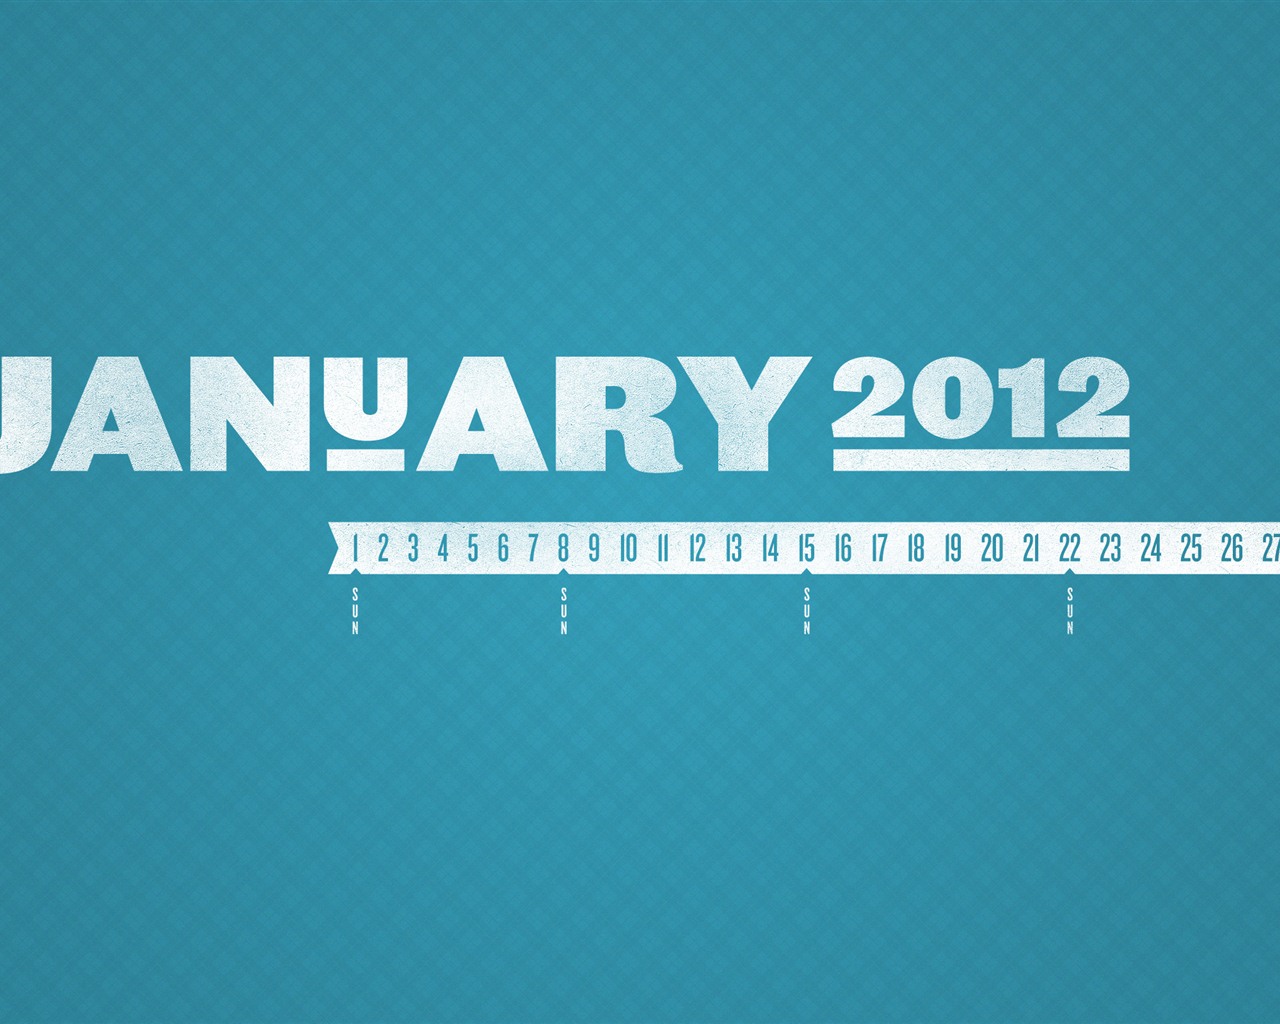 January 2012 Calendar Wallpapers #19 - 1280x1024